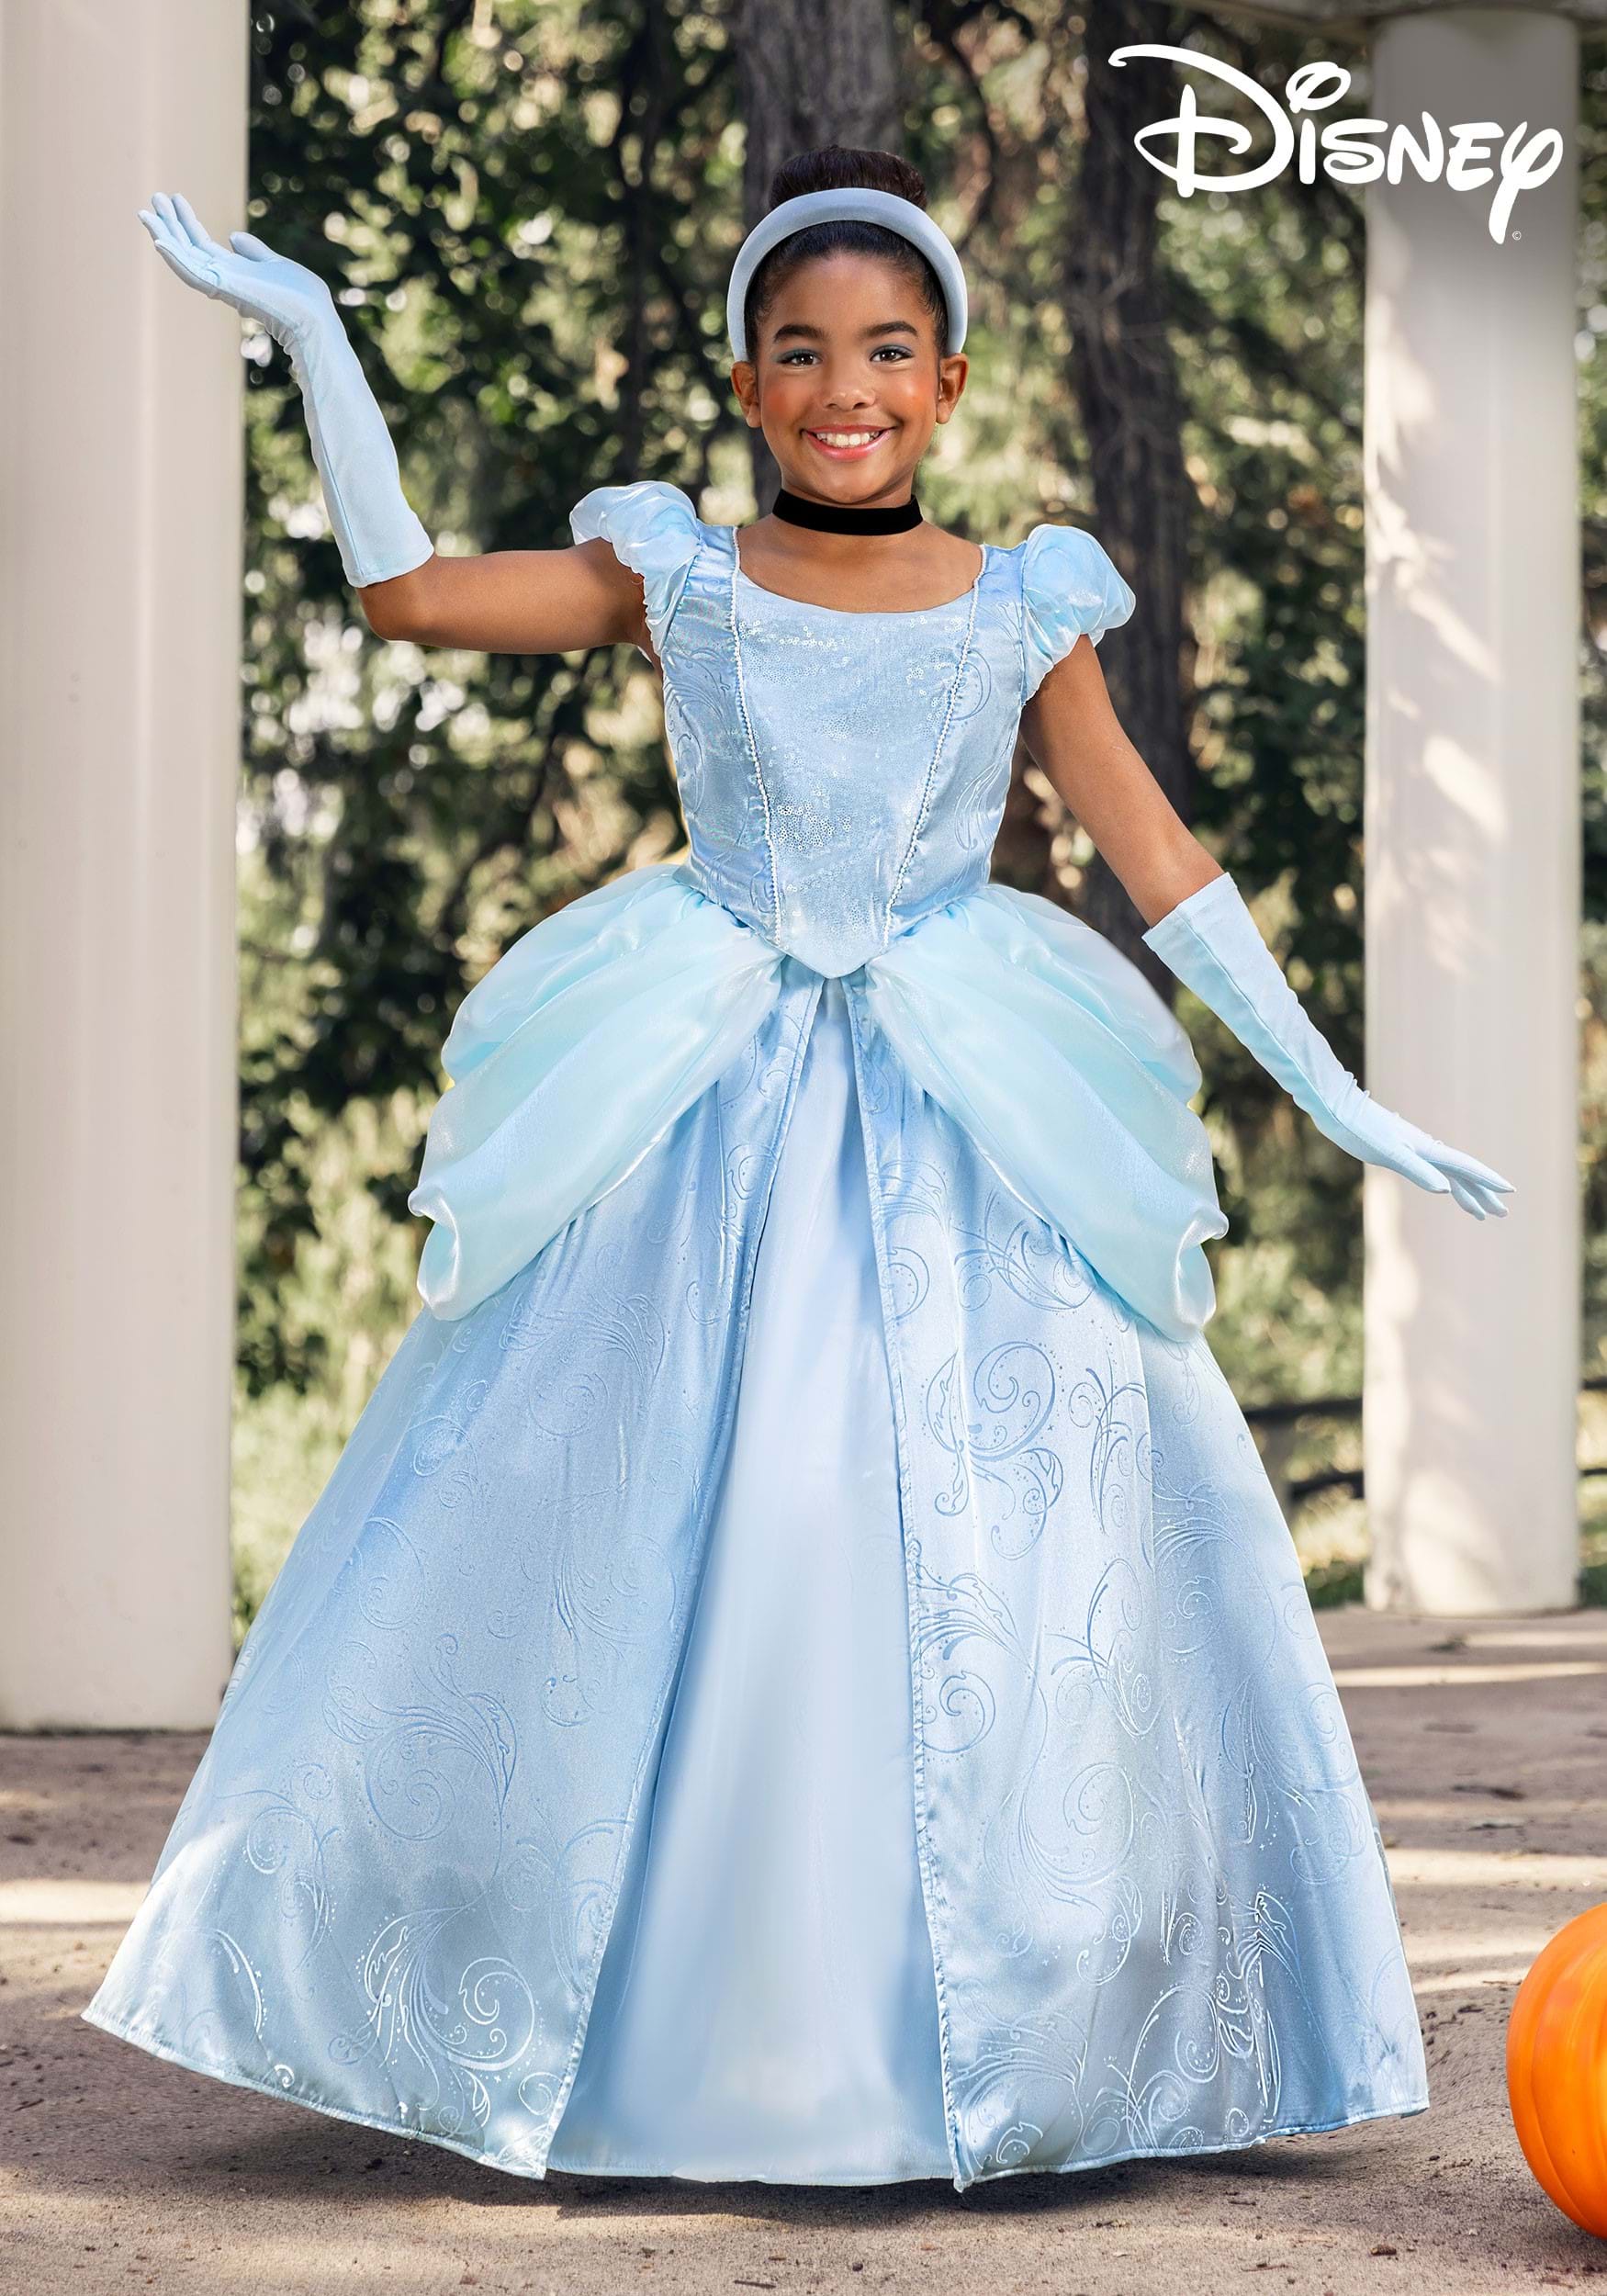 Cinderella Dress for Birthday Costume or Photo Shoot Cinderella Dress Outfit  Birthday Dress Cinderella Costume Princess Dress for Birthday - Etsy | Cinderella  dresses, Cinderella costume, Princess costumes